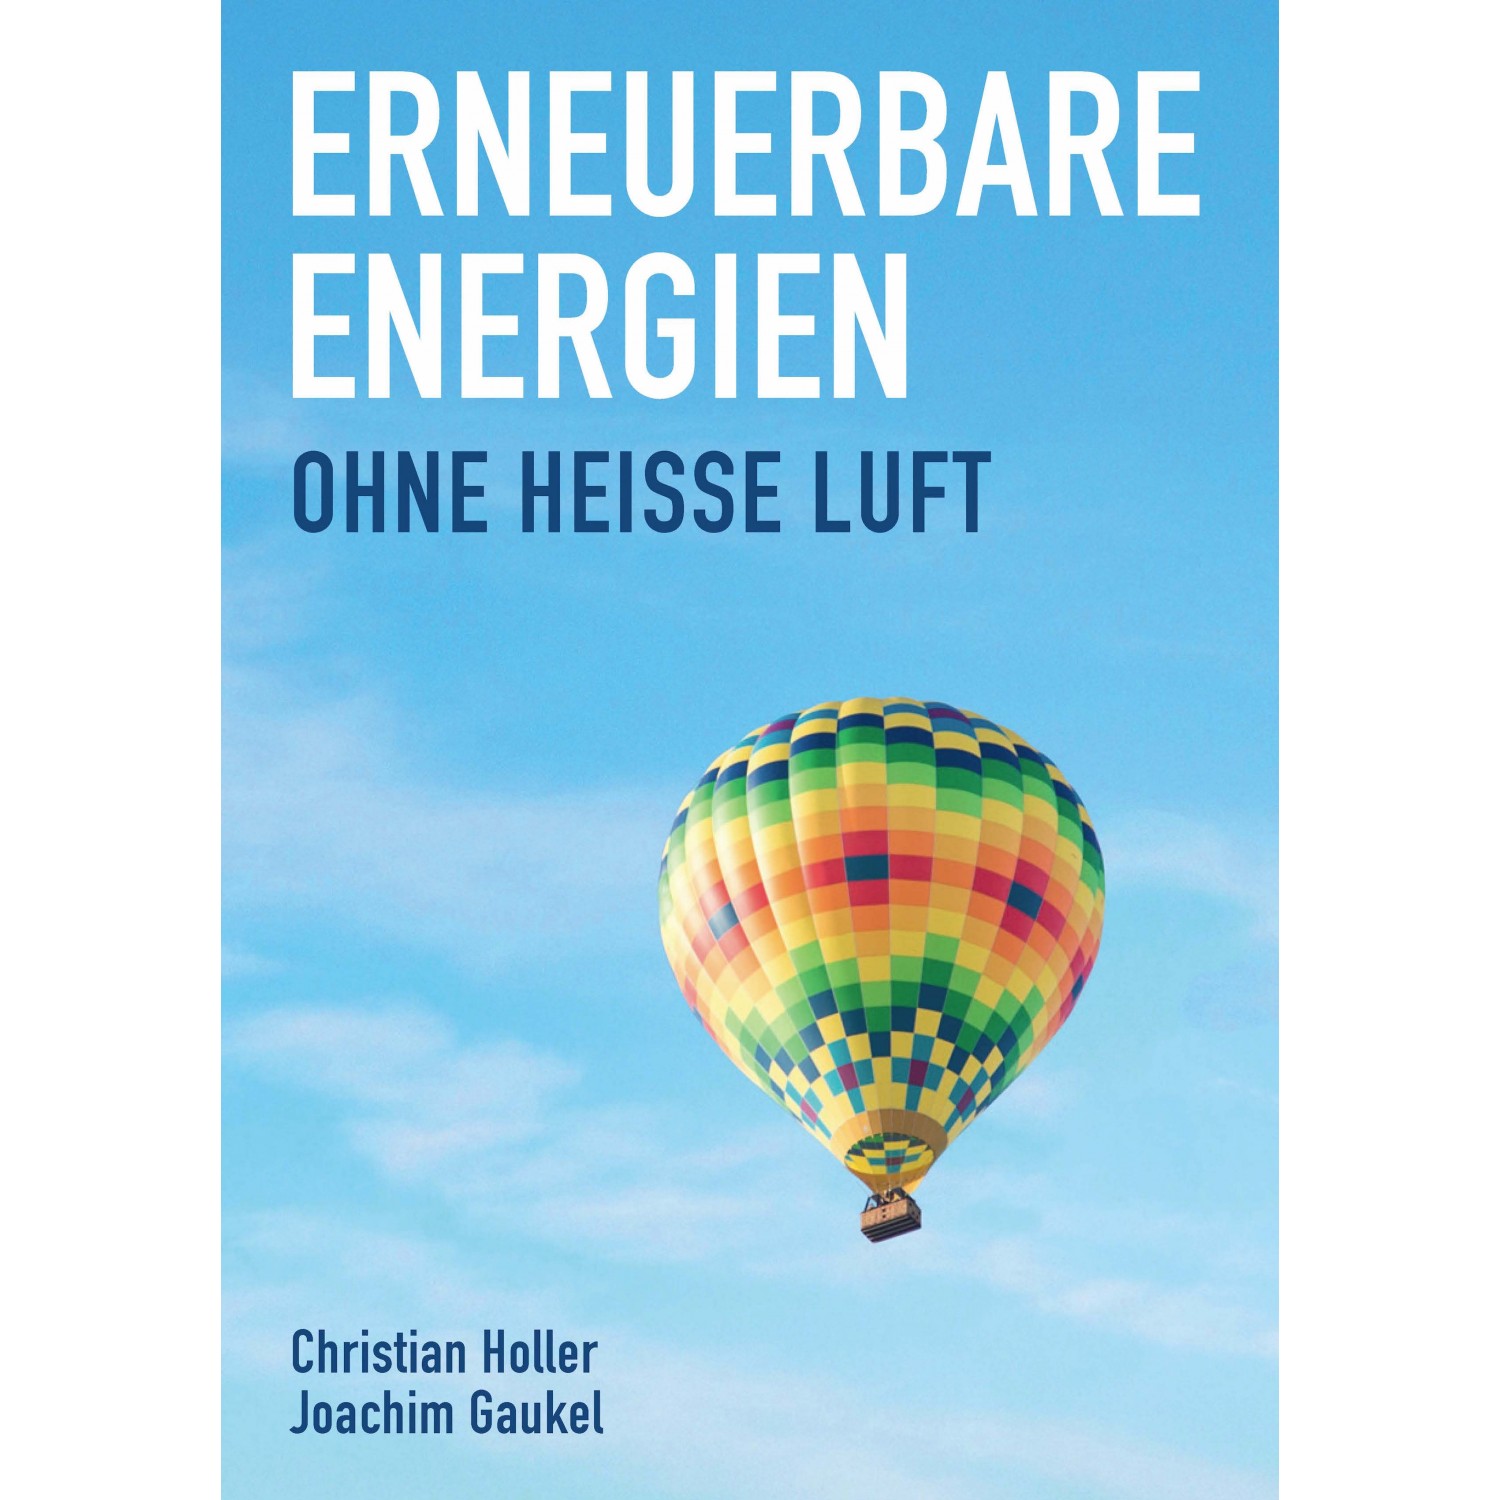 Erneuerbare Energien - C. Holler, J. Gaukel | oekom Verlag